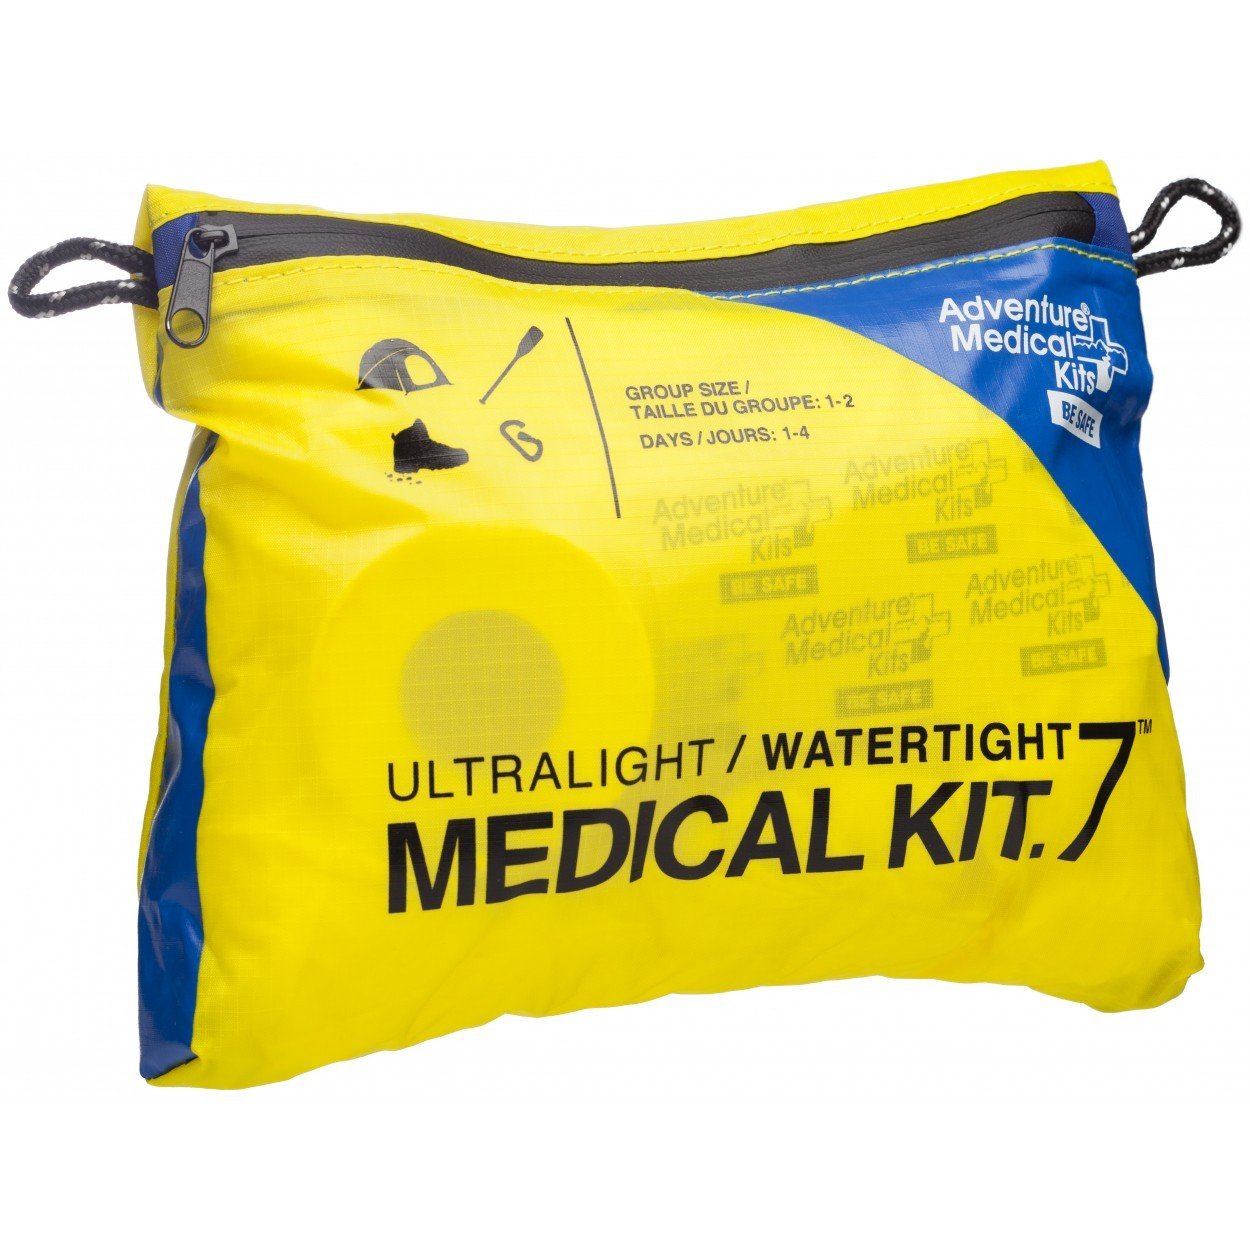 Adventure Medical Kits Adventure Medical Kit Ultralight/Watertight .7 First Aid